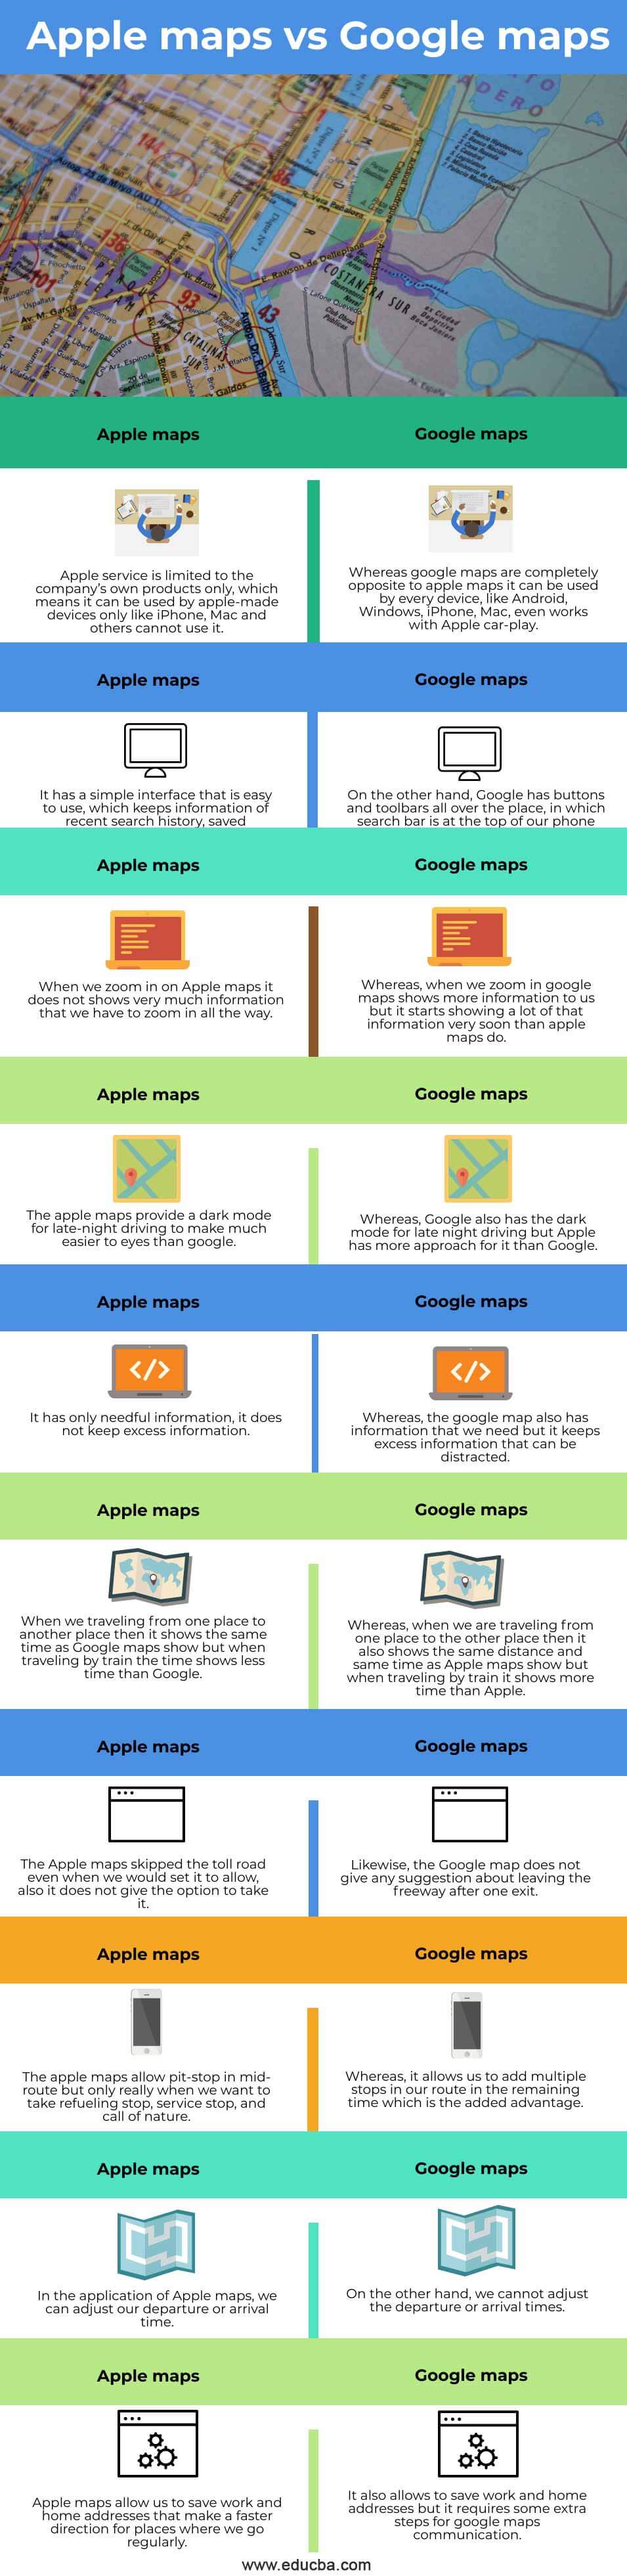 Apple-maps-vs-Google-maps-info